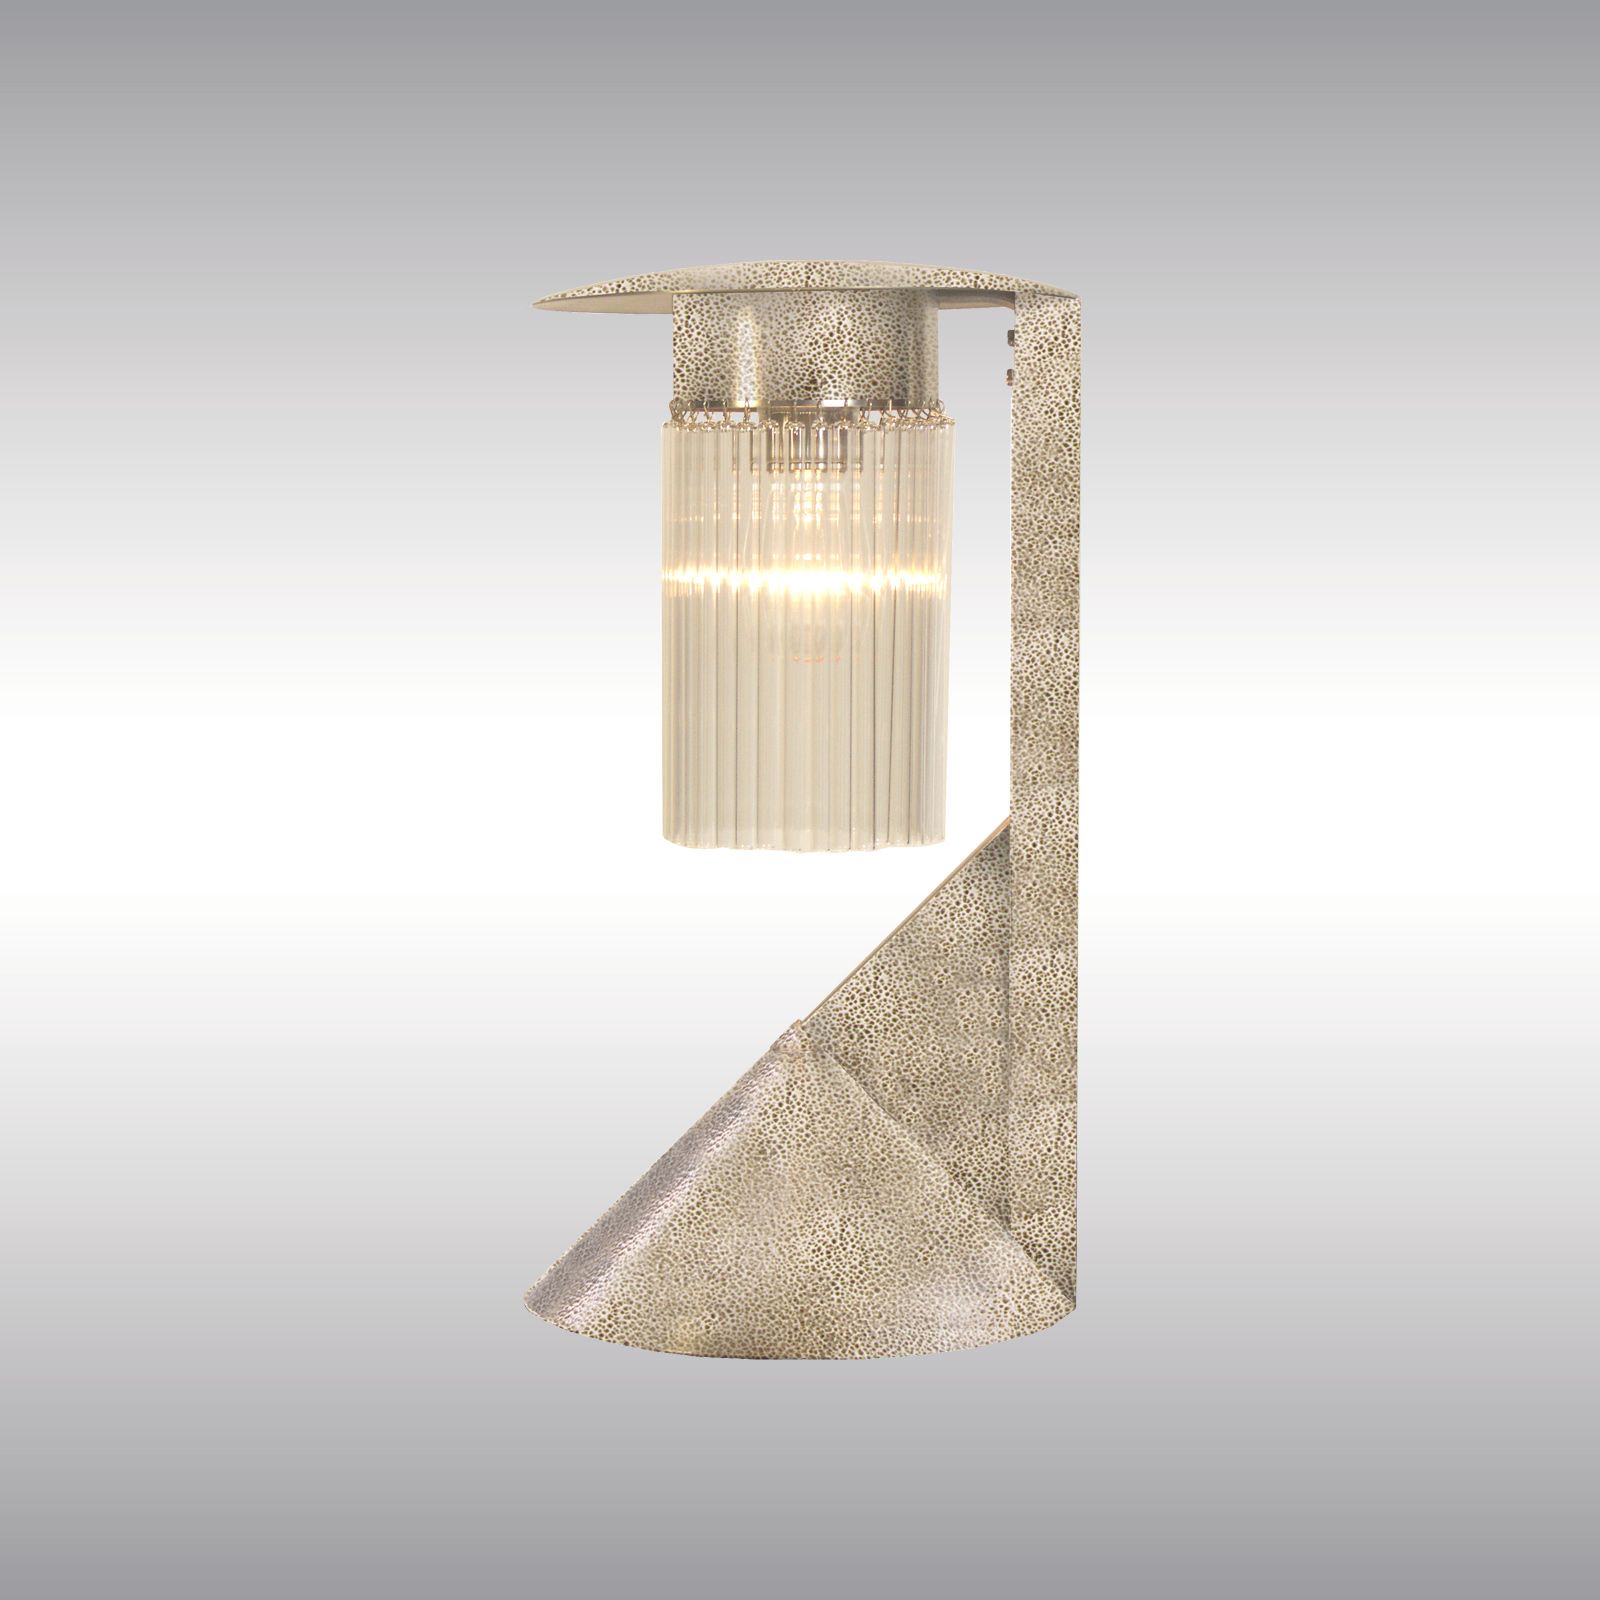 WOKA LAMPS VIENNA - OrderNr.: 20314|Reininghaus, Kolo Moser hammered Tischlampe - Design: Koloman (Kolo) Moser